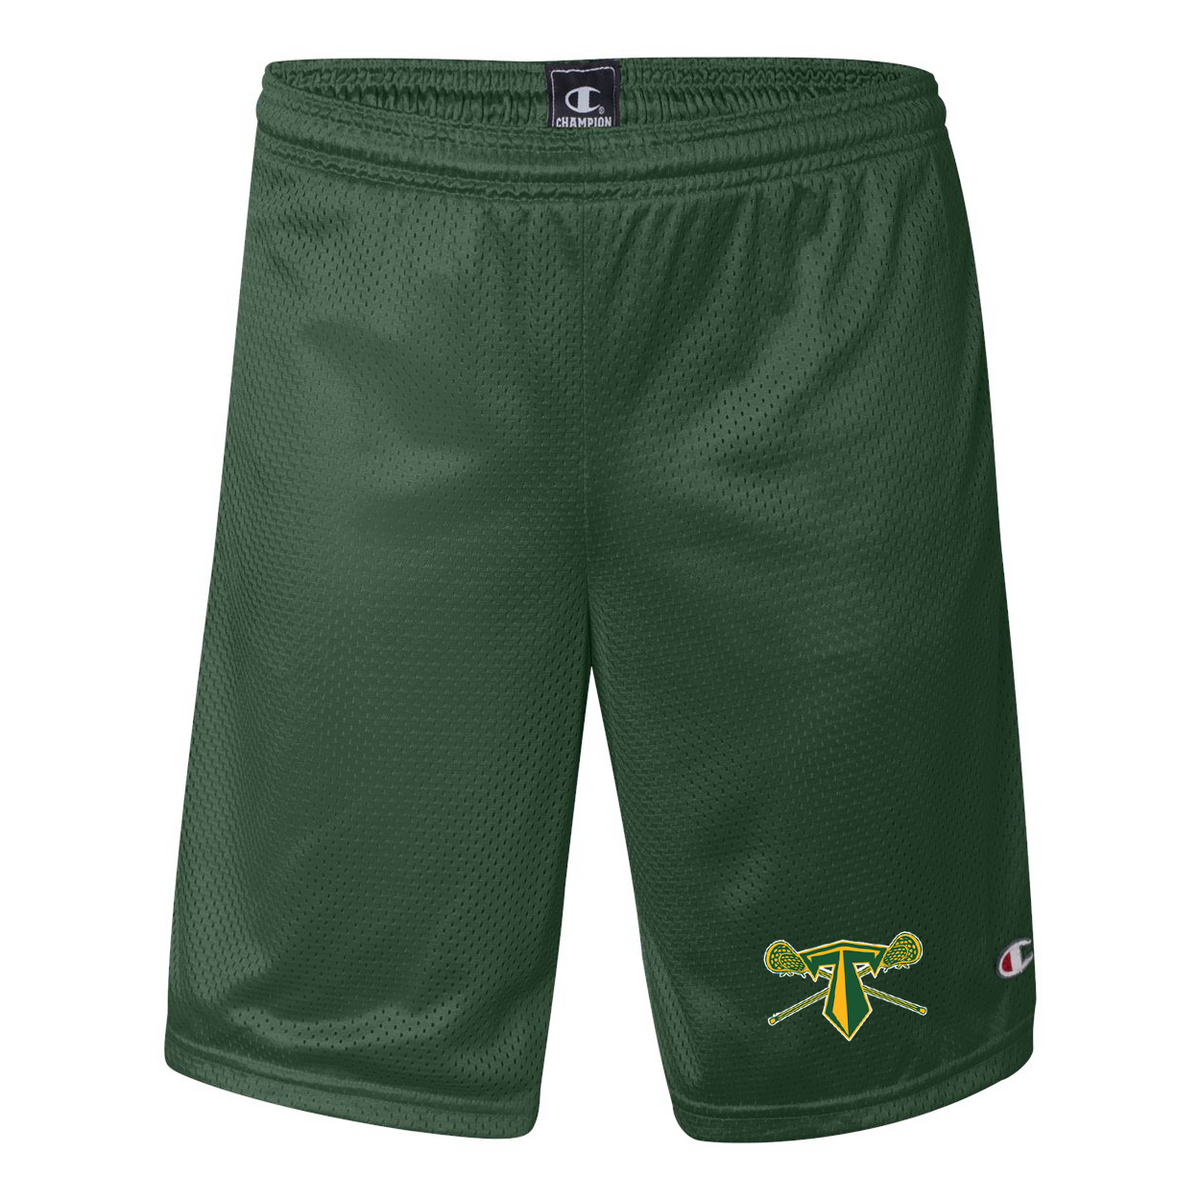 Lynbrook PAL Lacrosse Champion Mesh Shorts with Pockets